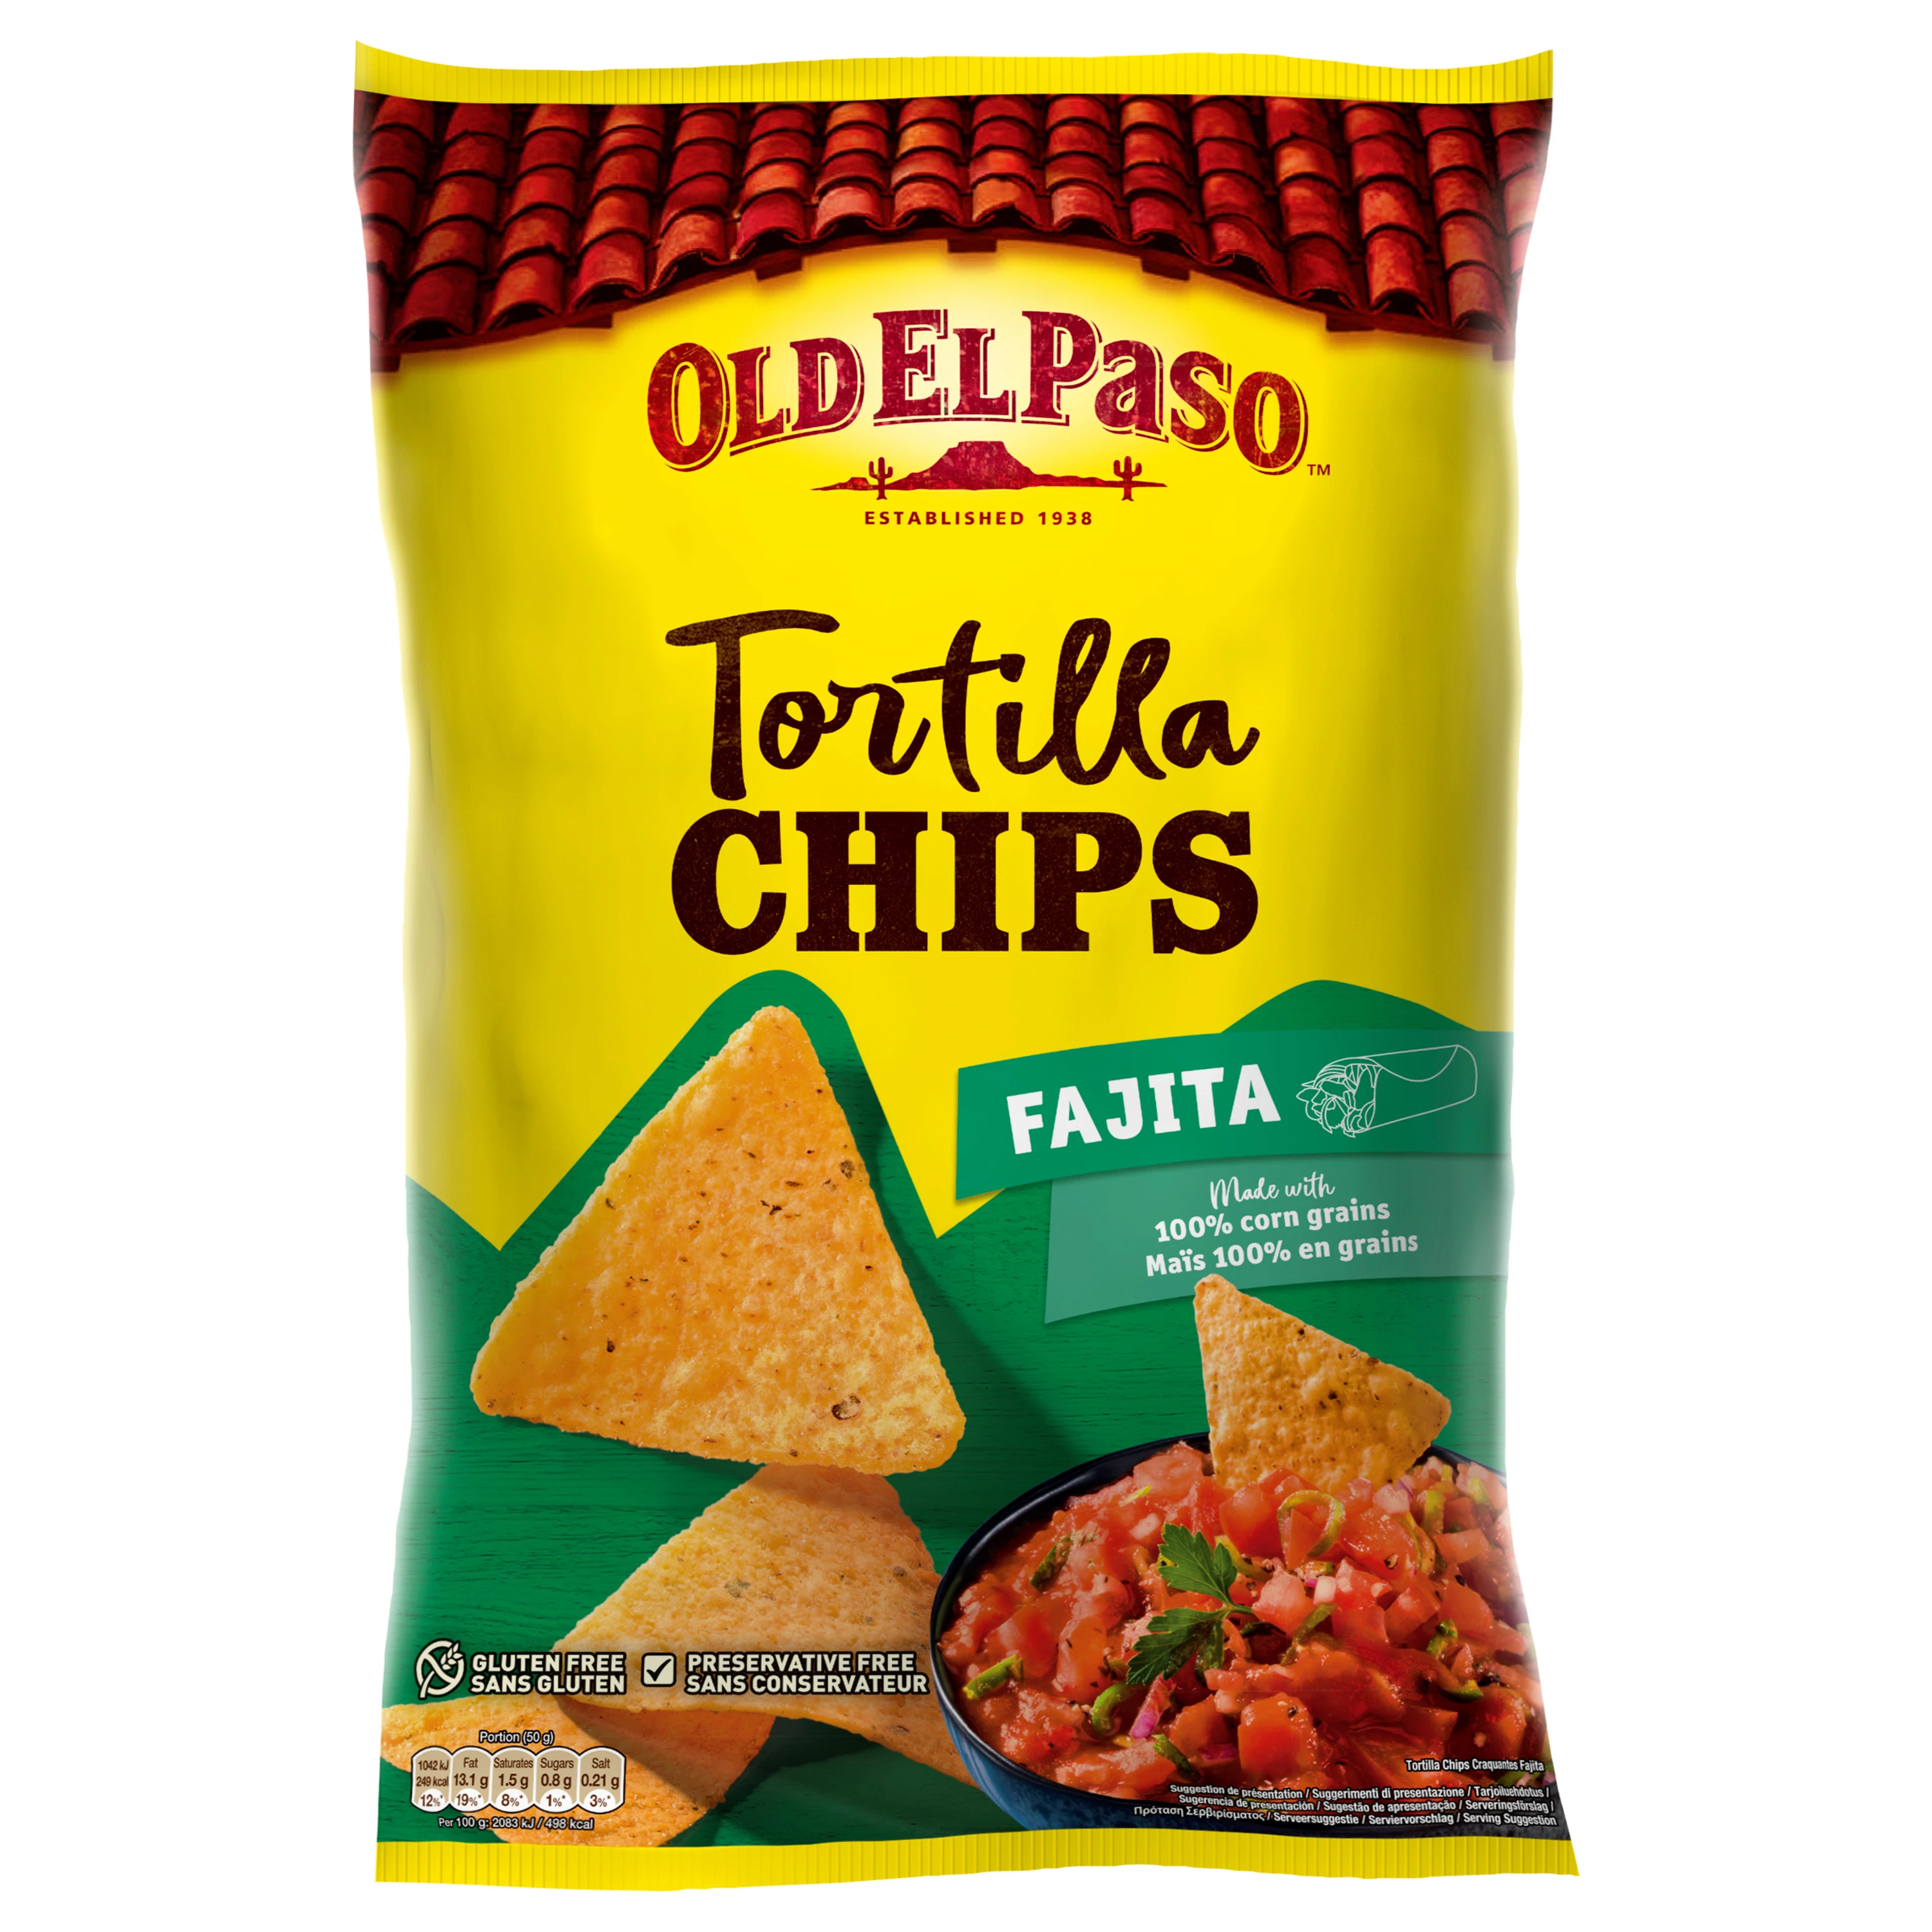 Tortilla chips croccanti fajita 185g - OLD EL PASO